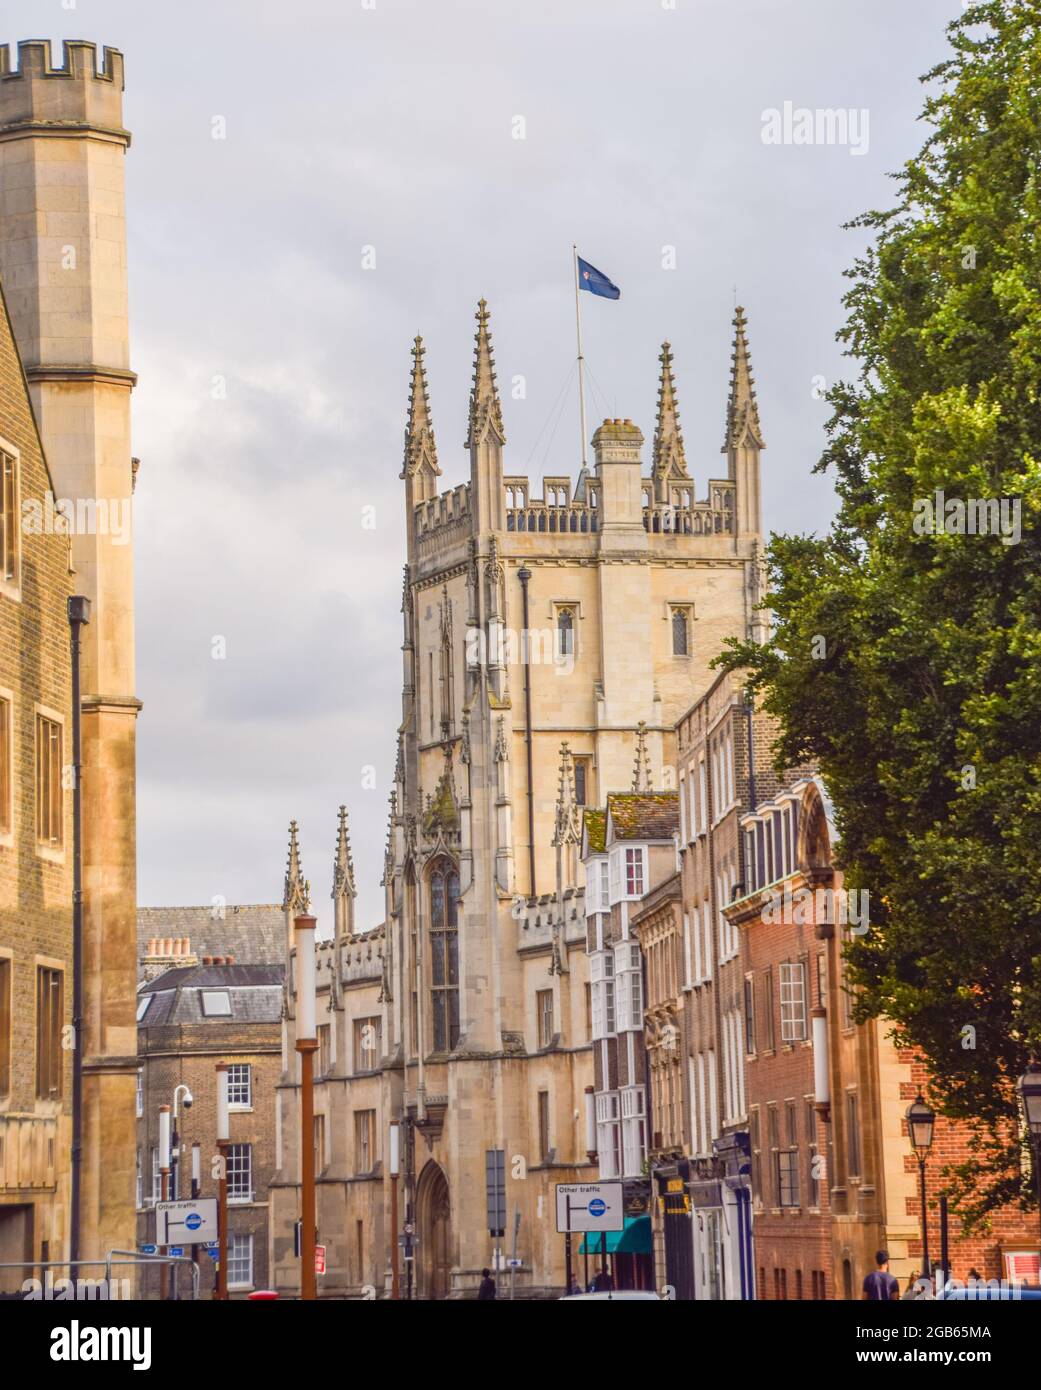 University of Cambridge, Cambridge, United Kingdom. Stock Photo